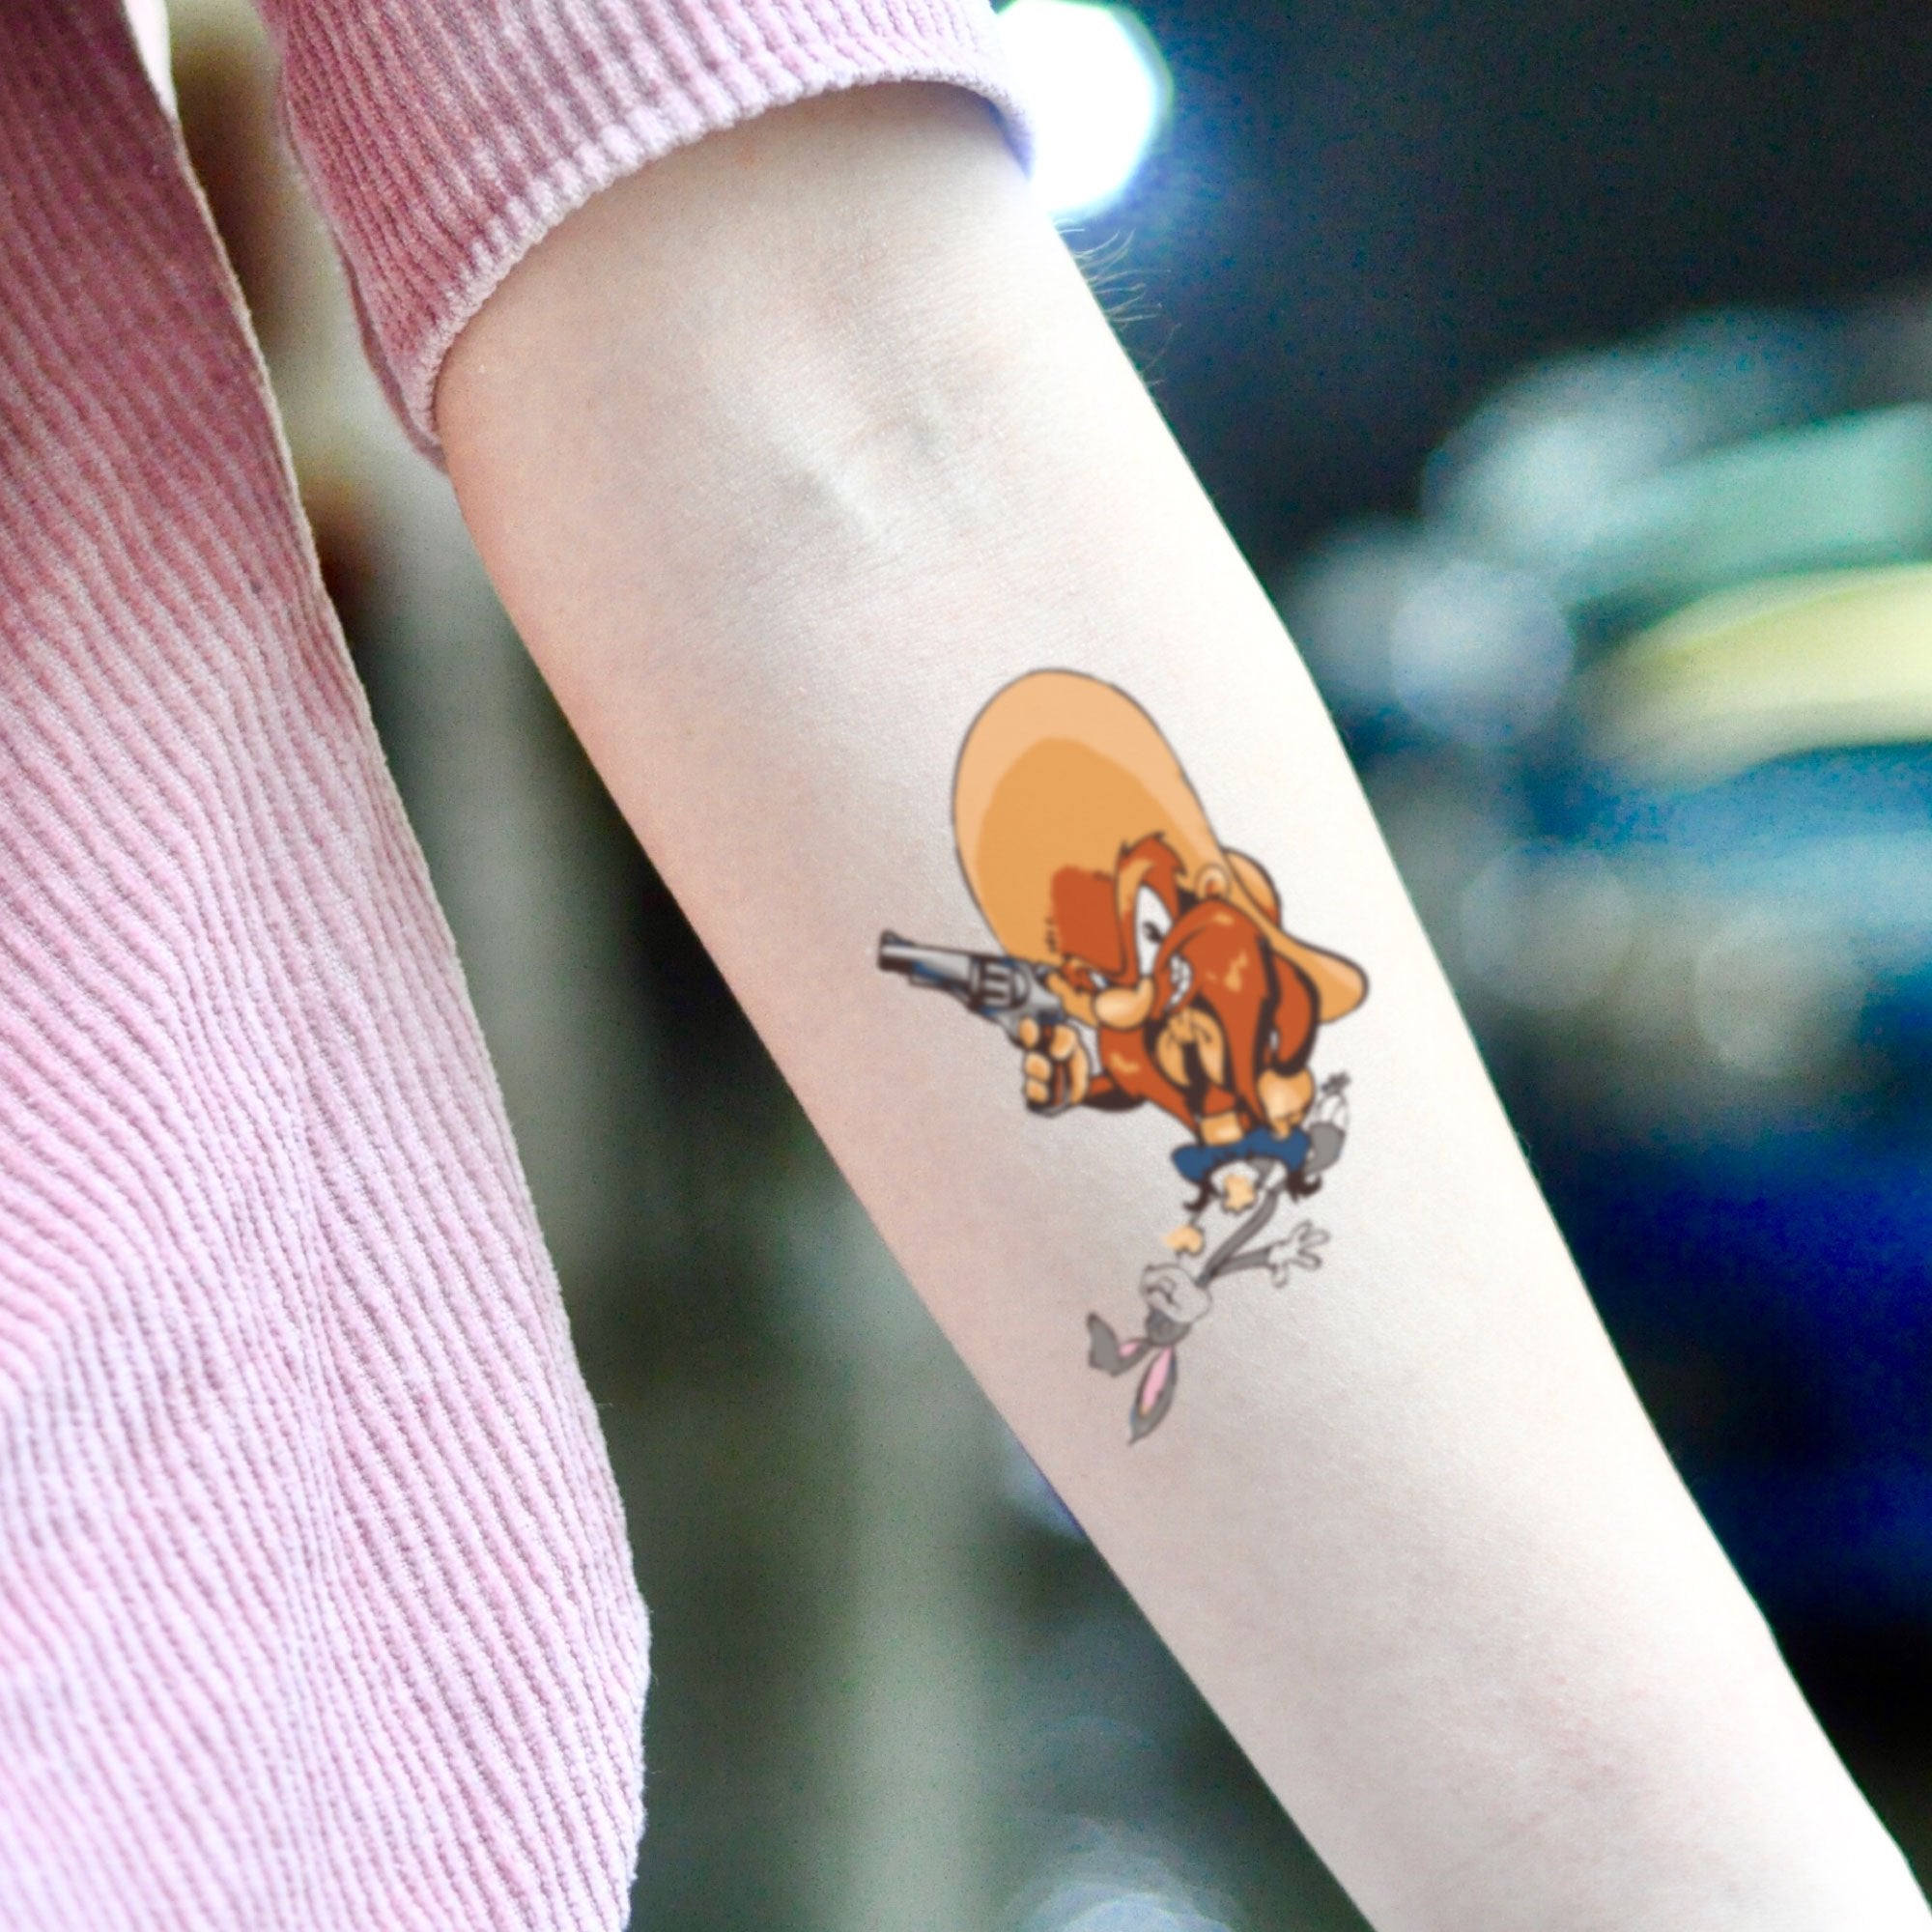 WKUK Tattoo Parlor Bowser by SpikeValentin on DeviantArt